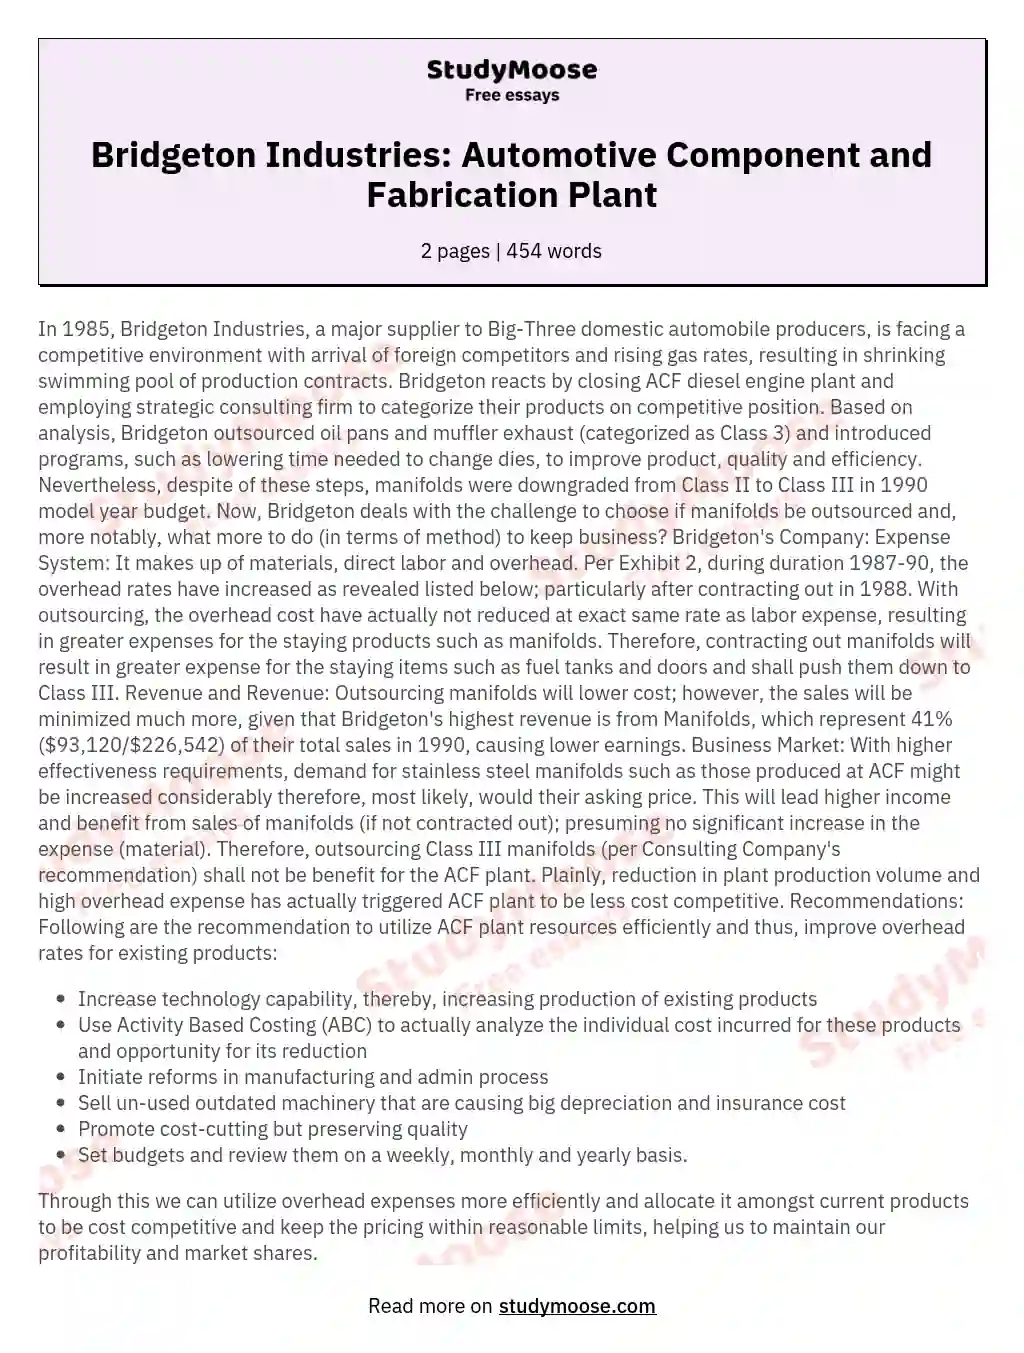 Bridgeton Industries: Automotive Component and Fabrication Plant essay